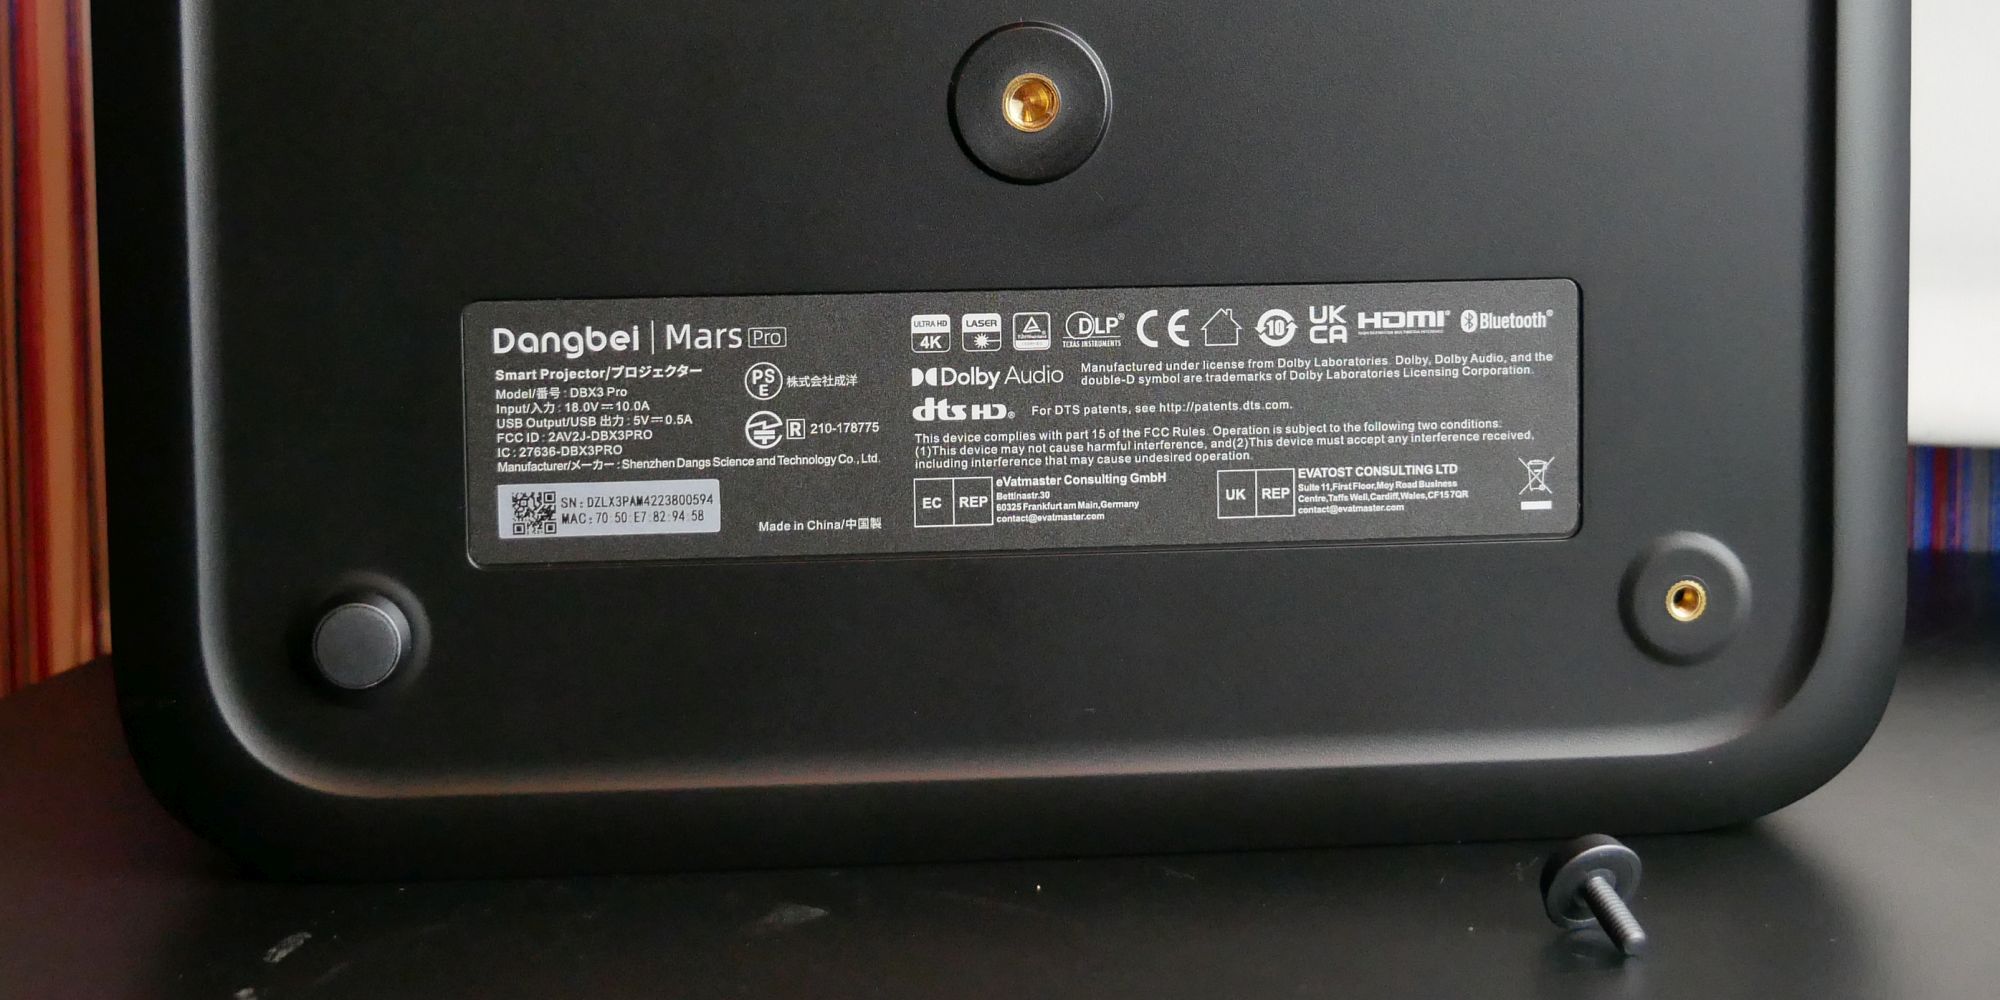 Dangbei Mars Pro 4K Laser Projector Review